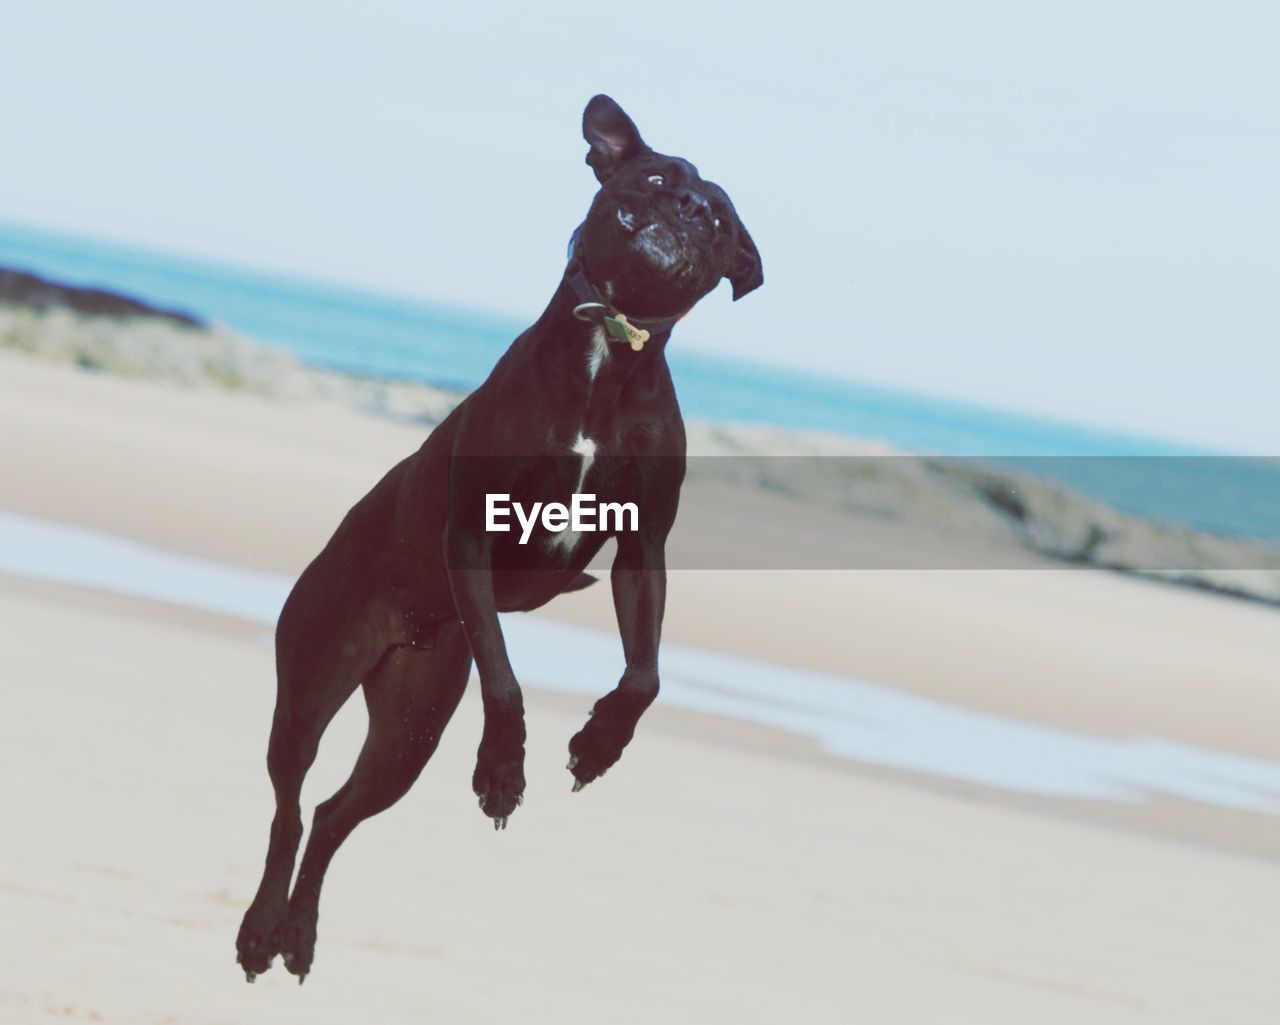 Dog jumping at beach against sky